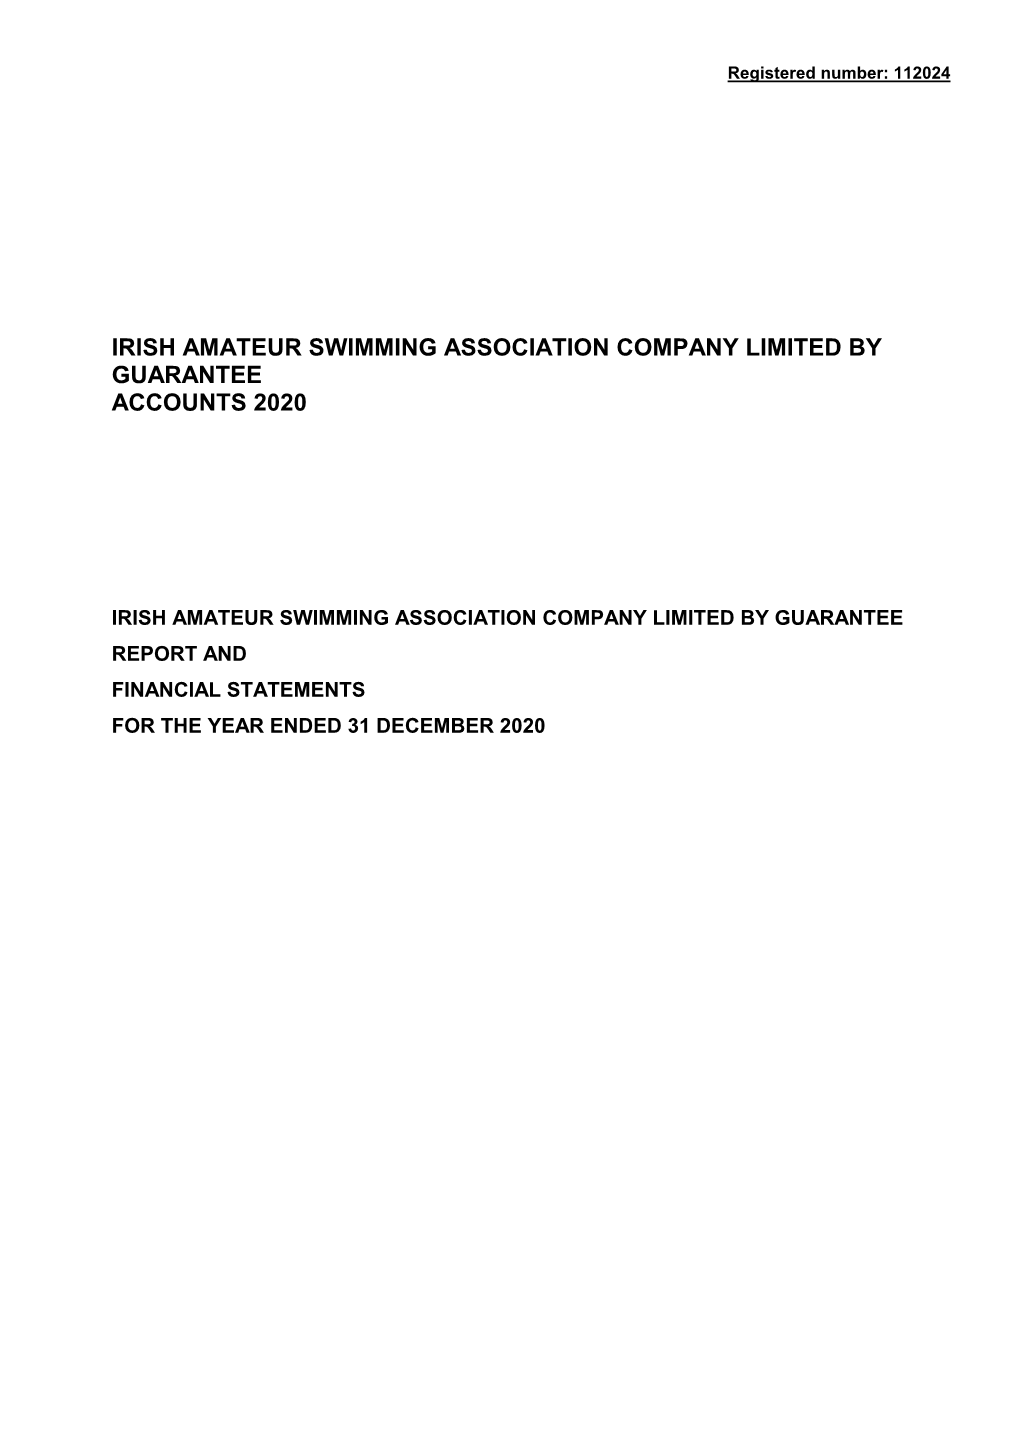 Irish Amateur Swimming Association Company Limited by Guarantee Accounts 2020